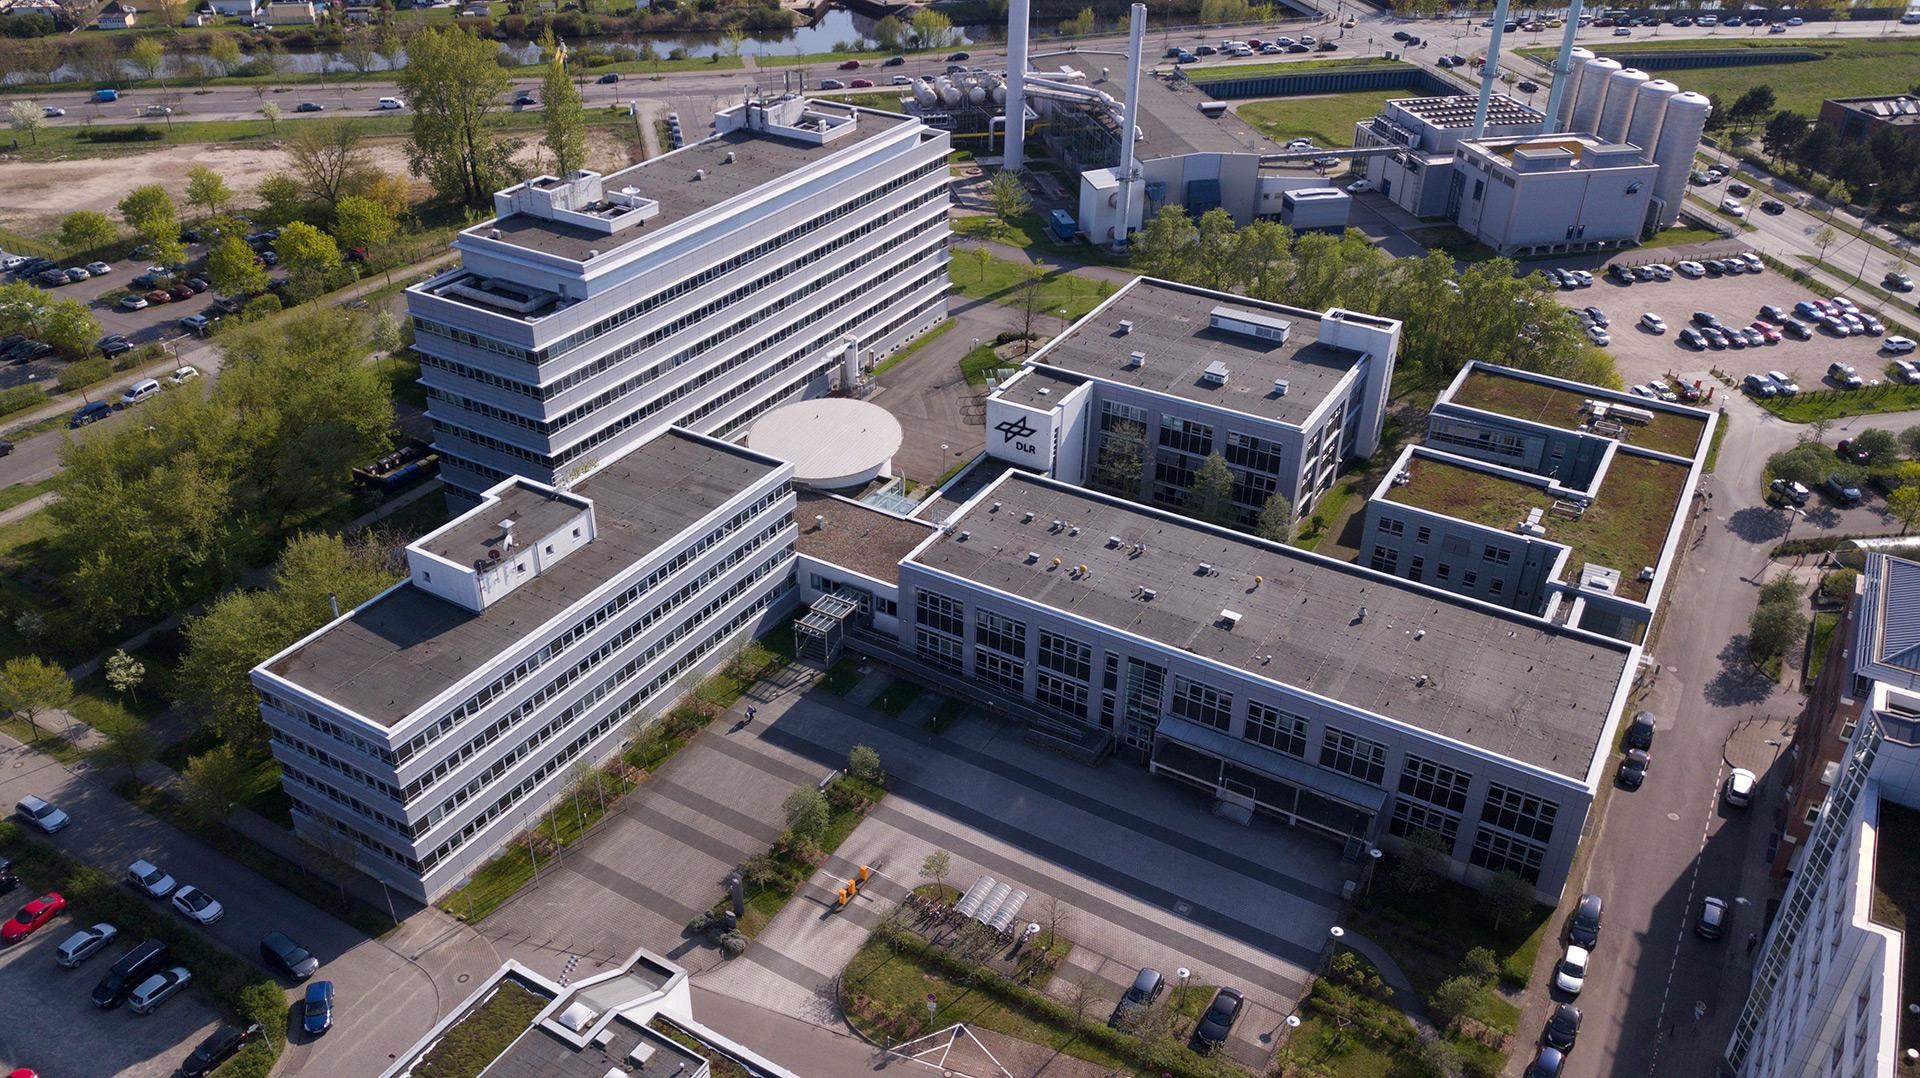 The Institute of Transport Research in Berlin-Adlershof